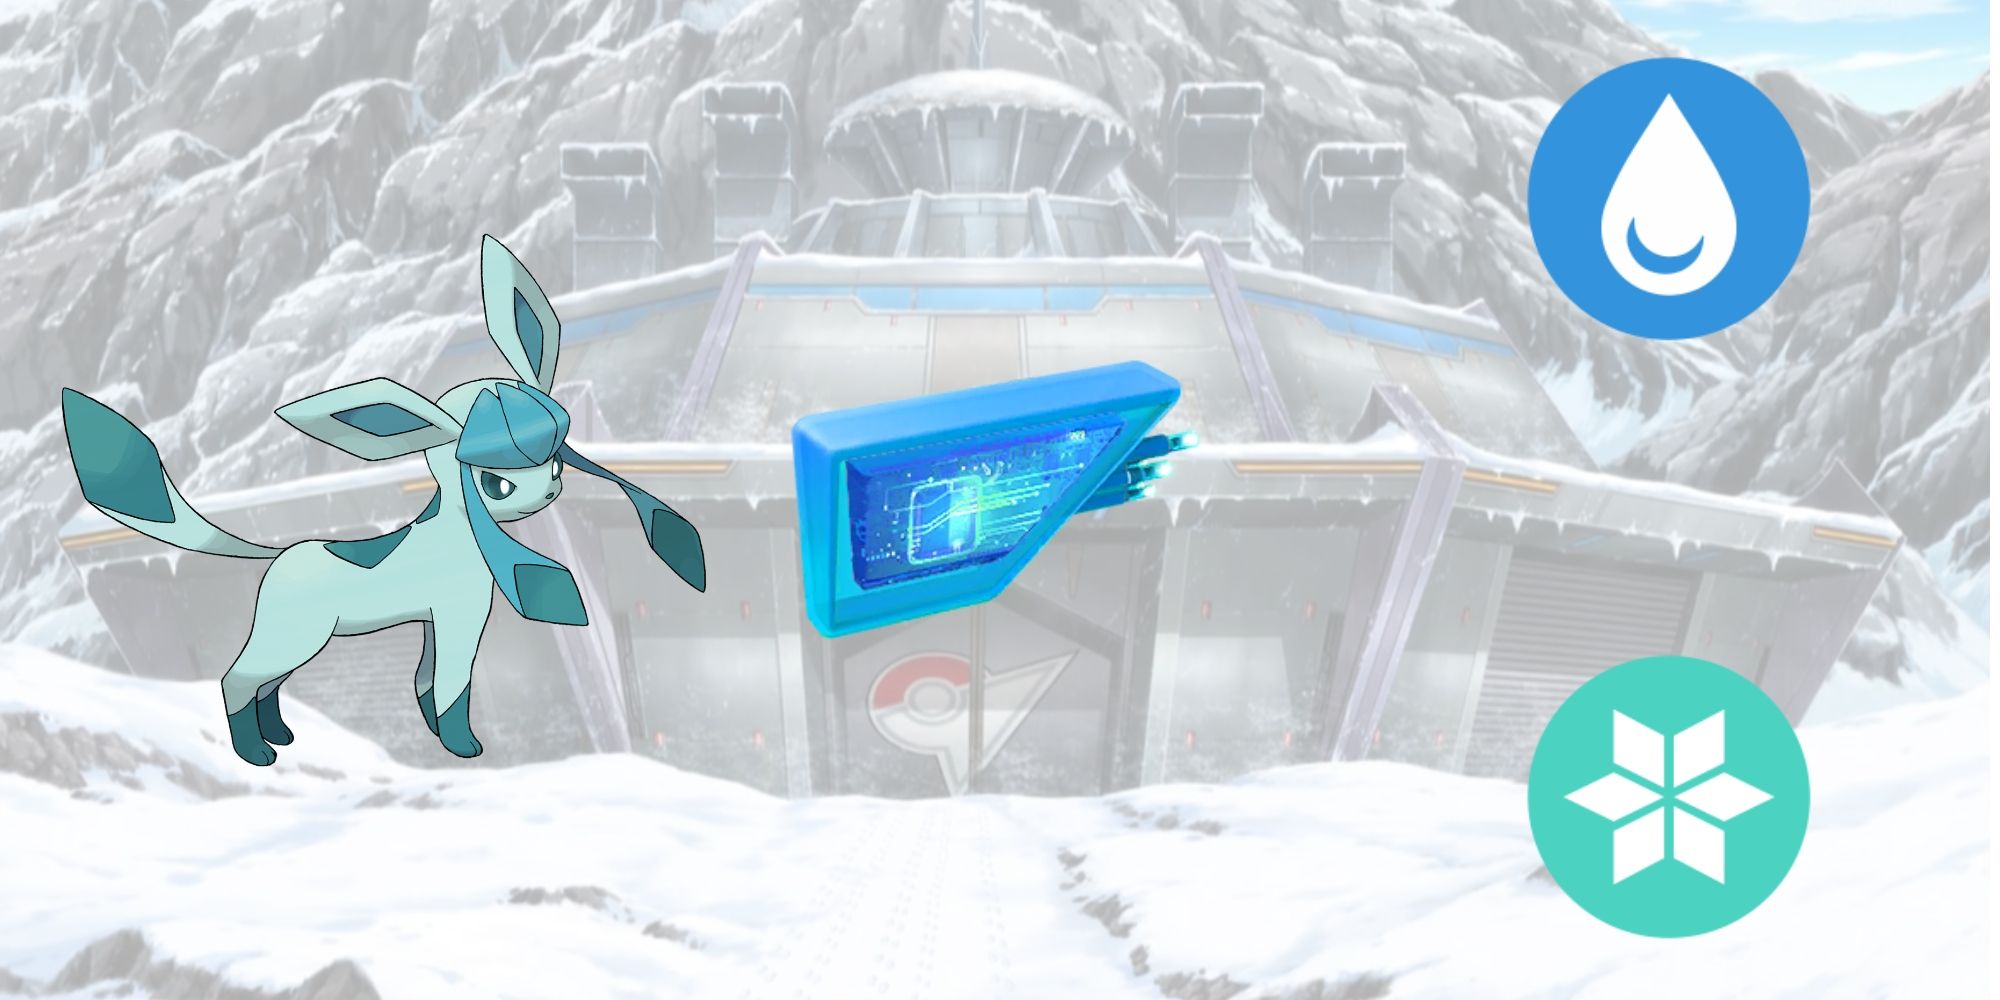 Pokemon GO Glacial Lure